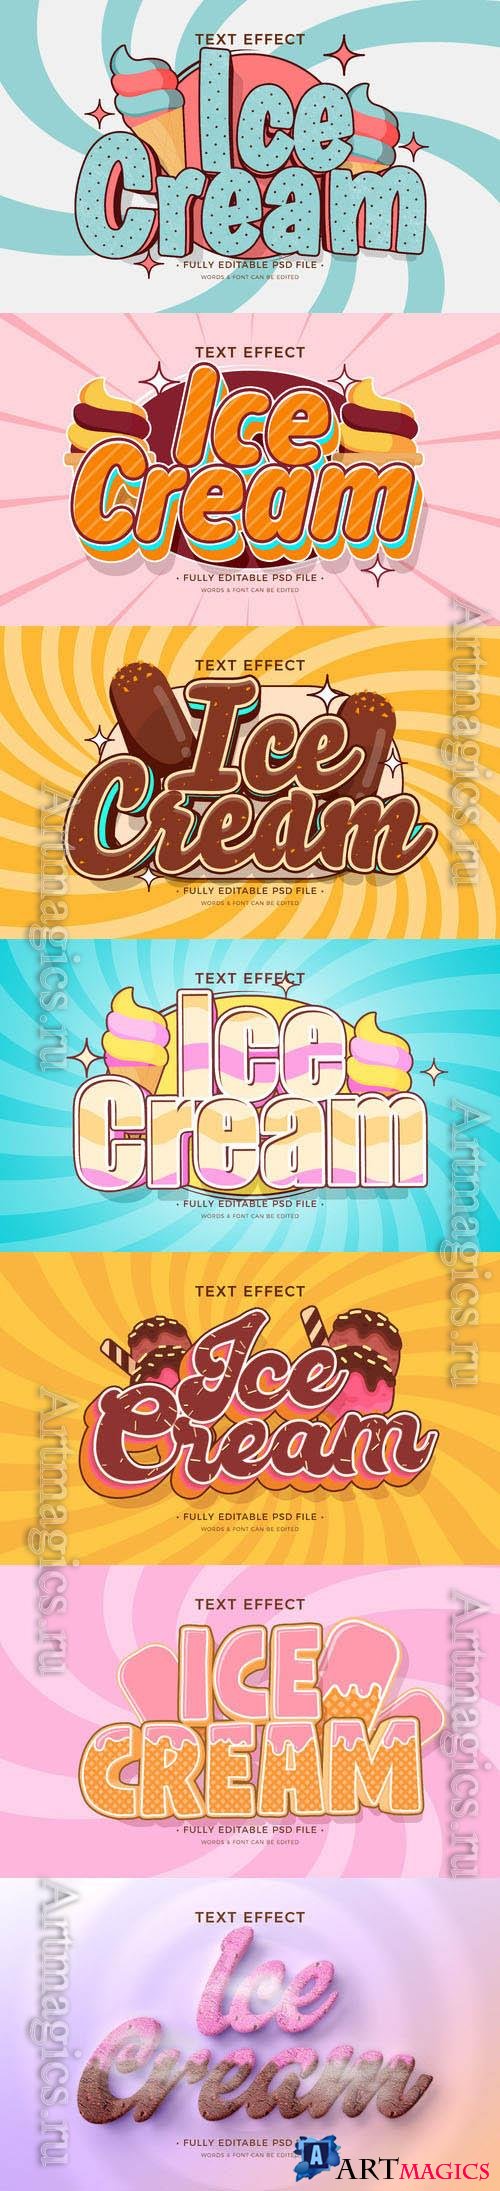 PSD ice cream text effect